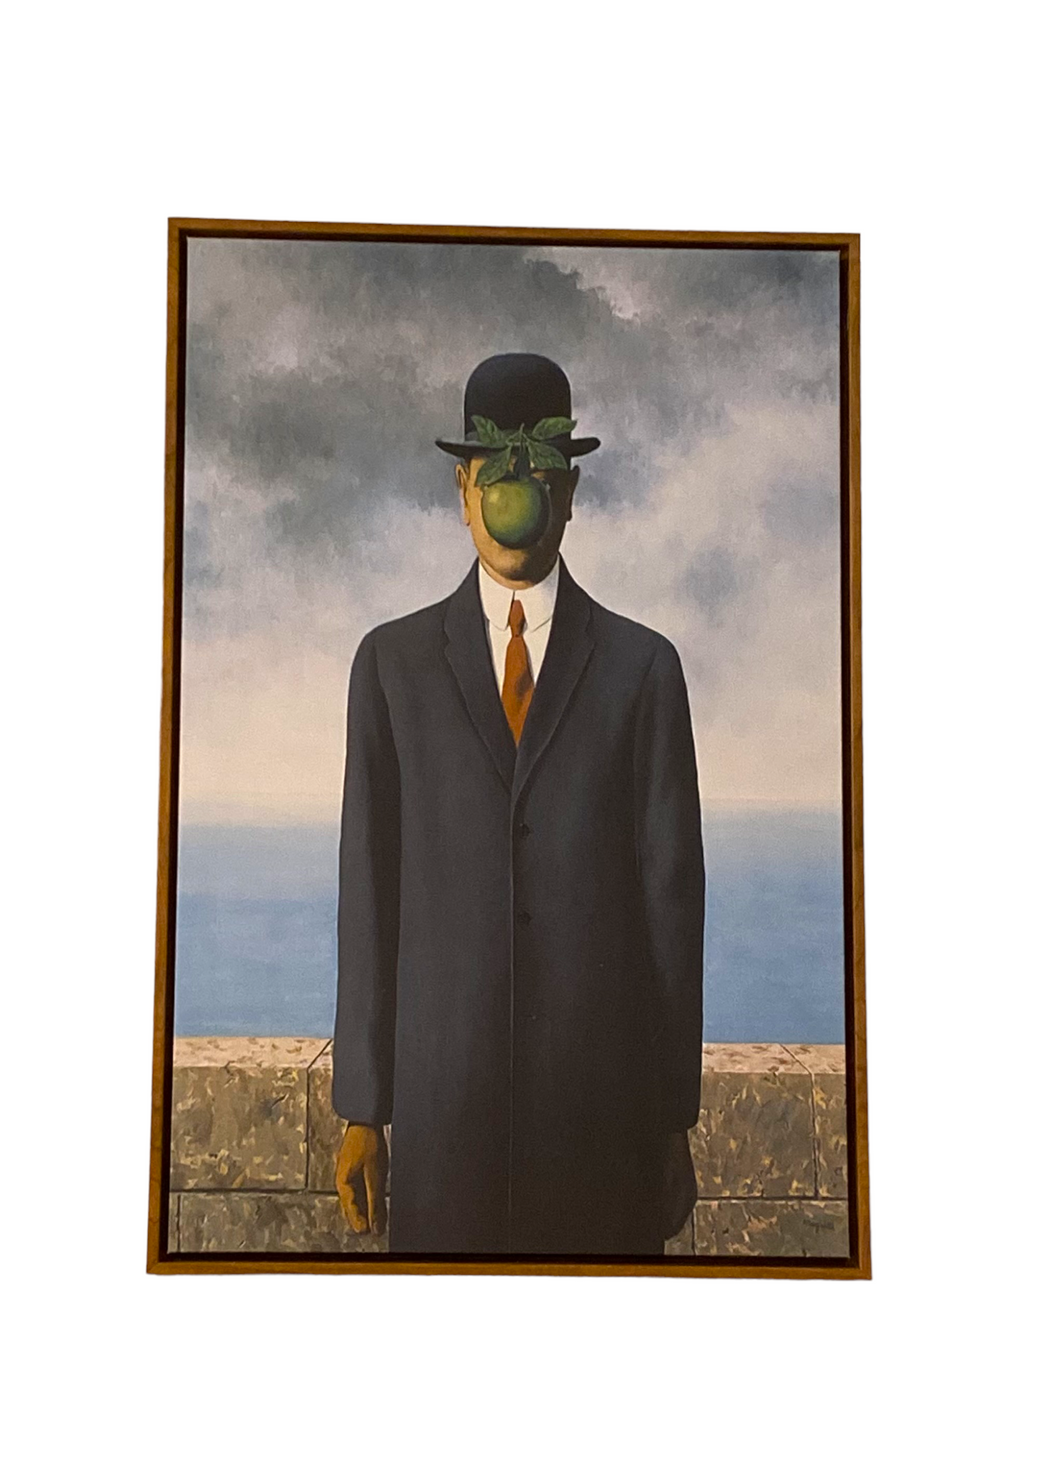 Rene Magritte’s ‘Son of Man’ Giclée on Canvas, Framed